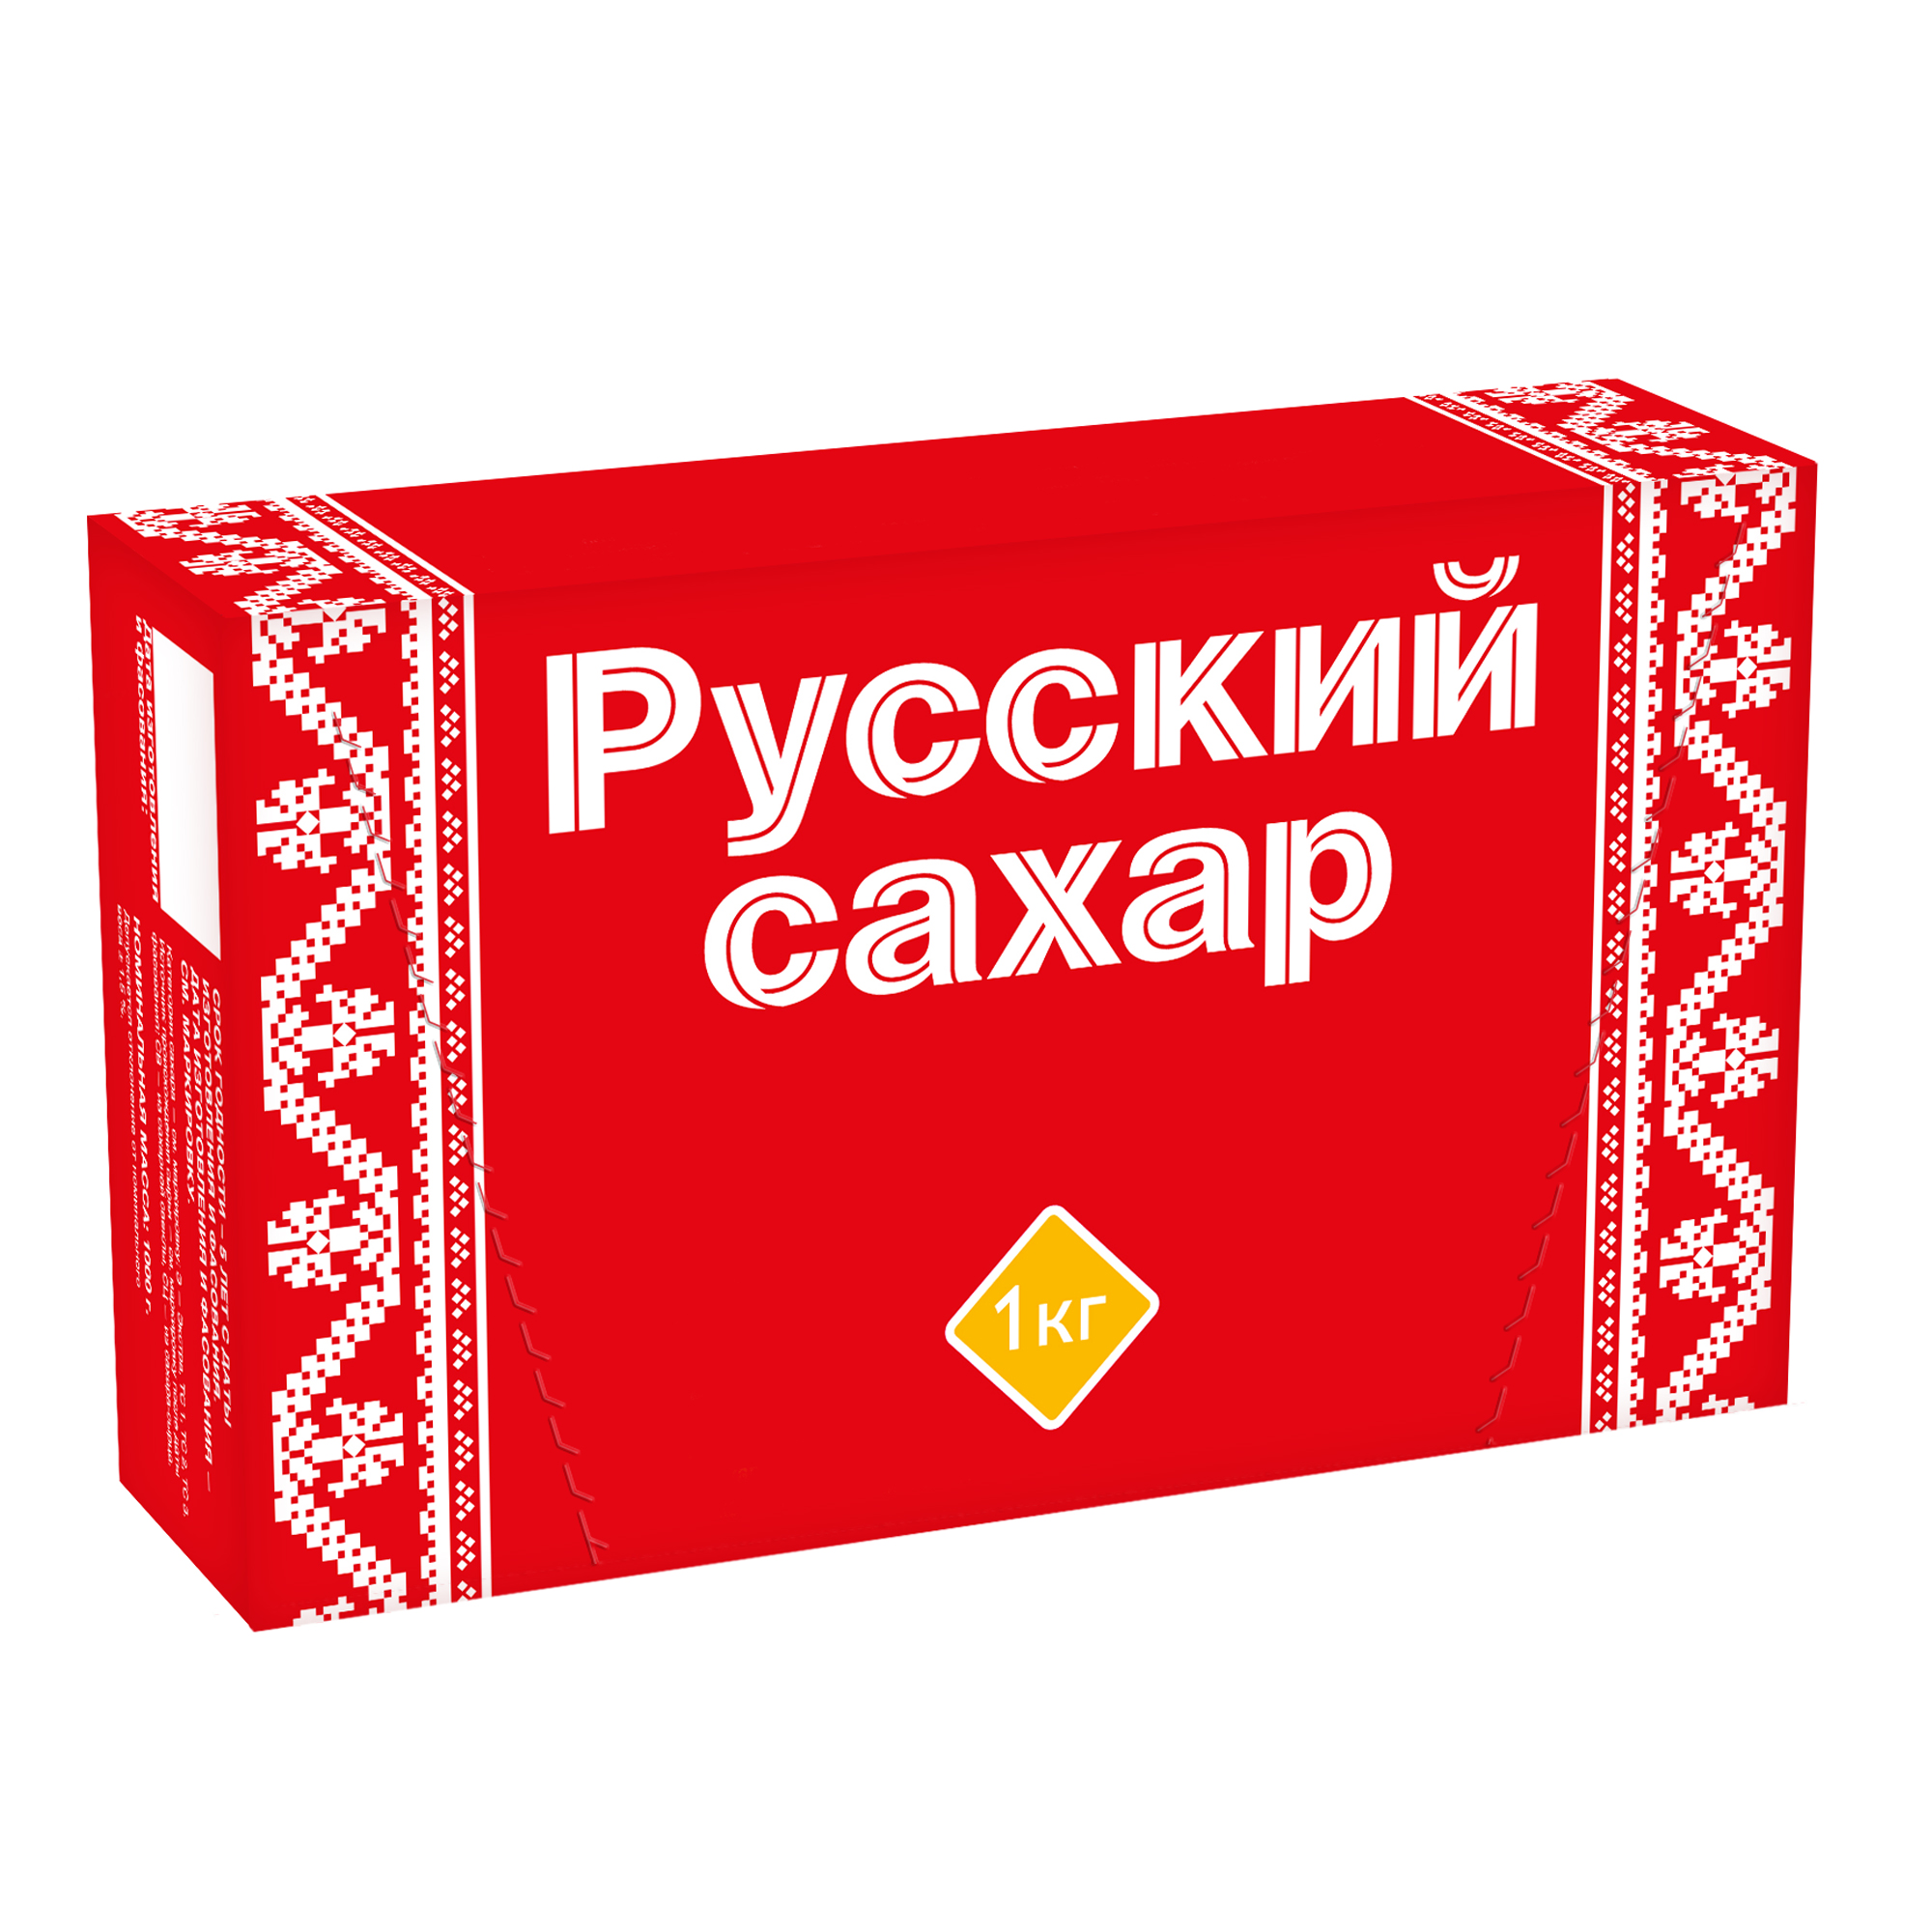 Сахар 1 кг. Сахар русский сахар прессованный, кусковой. Русский сахар логотип. Русагро сахар. Русский сахар узор.